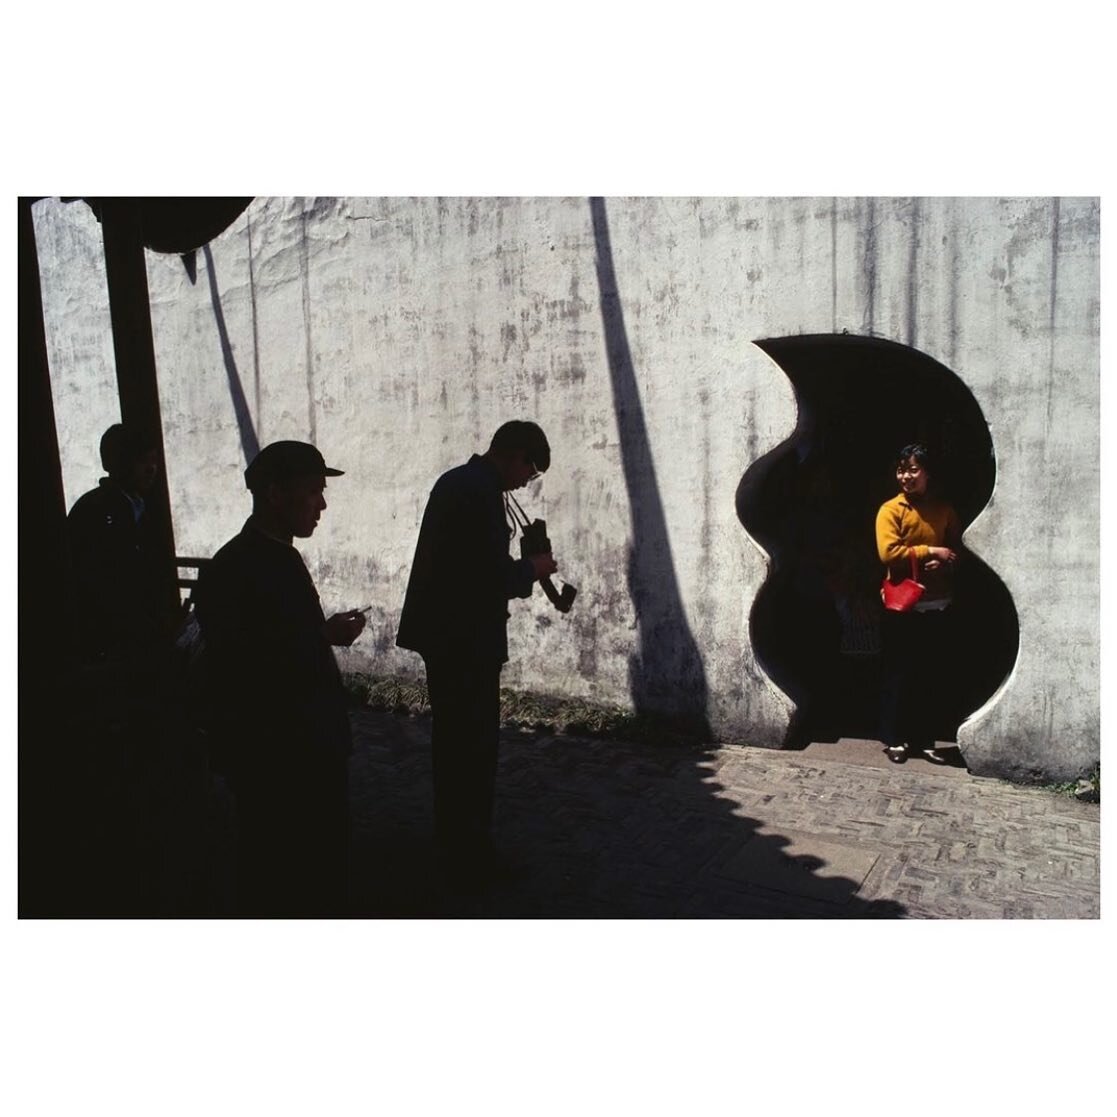 -
PHOTO: YuYuan Gardens. Shanghai. China. 1980. 
. 
&copy; #BrunoBarbey/#MagnumPhotos
.
.
#brunobarbey #documentary #photography #photojournalism #magnum #magnumphotos #magnumphotosphotographers #magnumphotoskoreaagent #europhotos #브루노바베이 #다큐멘터리 #다큐멘